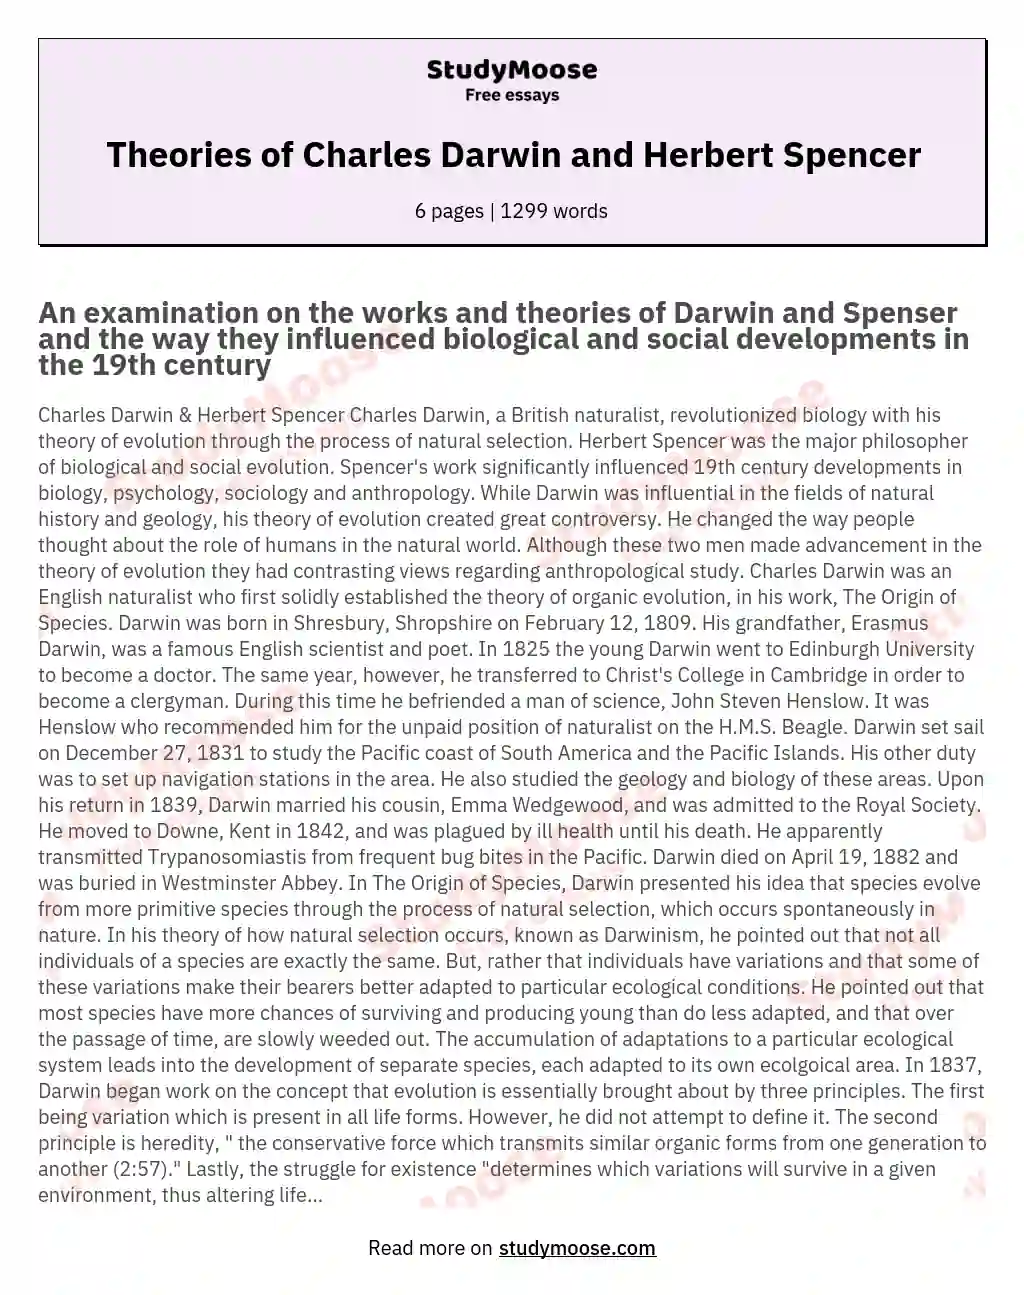 Theories of Charles Darwin and Herbert Spencer essay